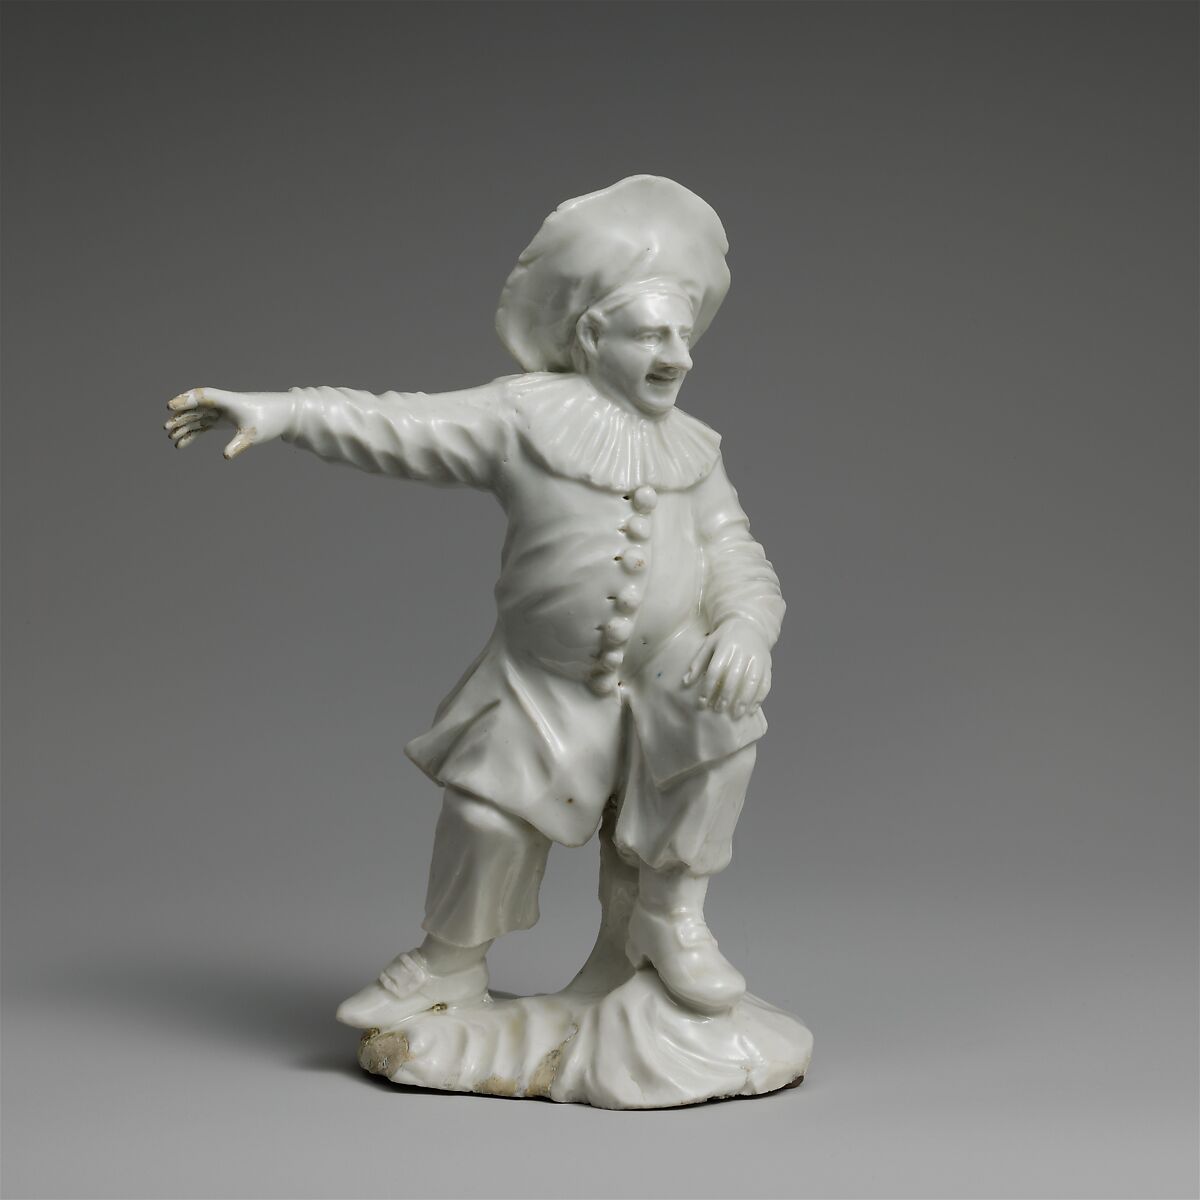 Pedrolino, Attributed to Cozzi Manufactory (Italian, 1764–1812), Hard-paste porcelain, Italian, Venice 